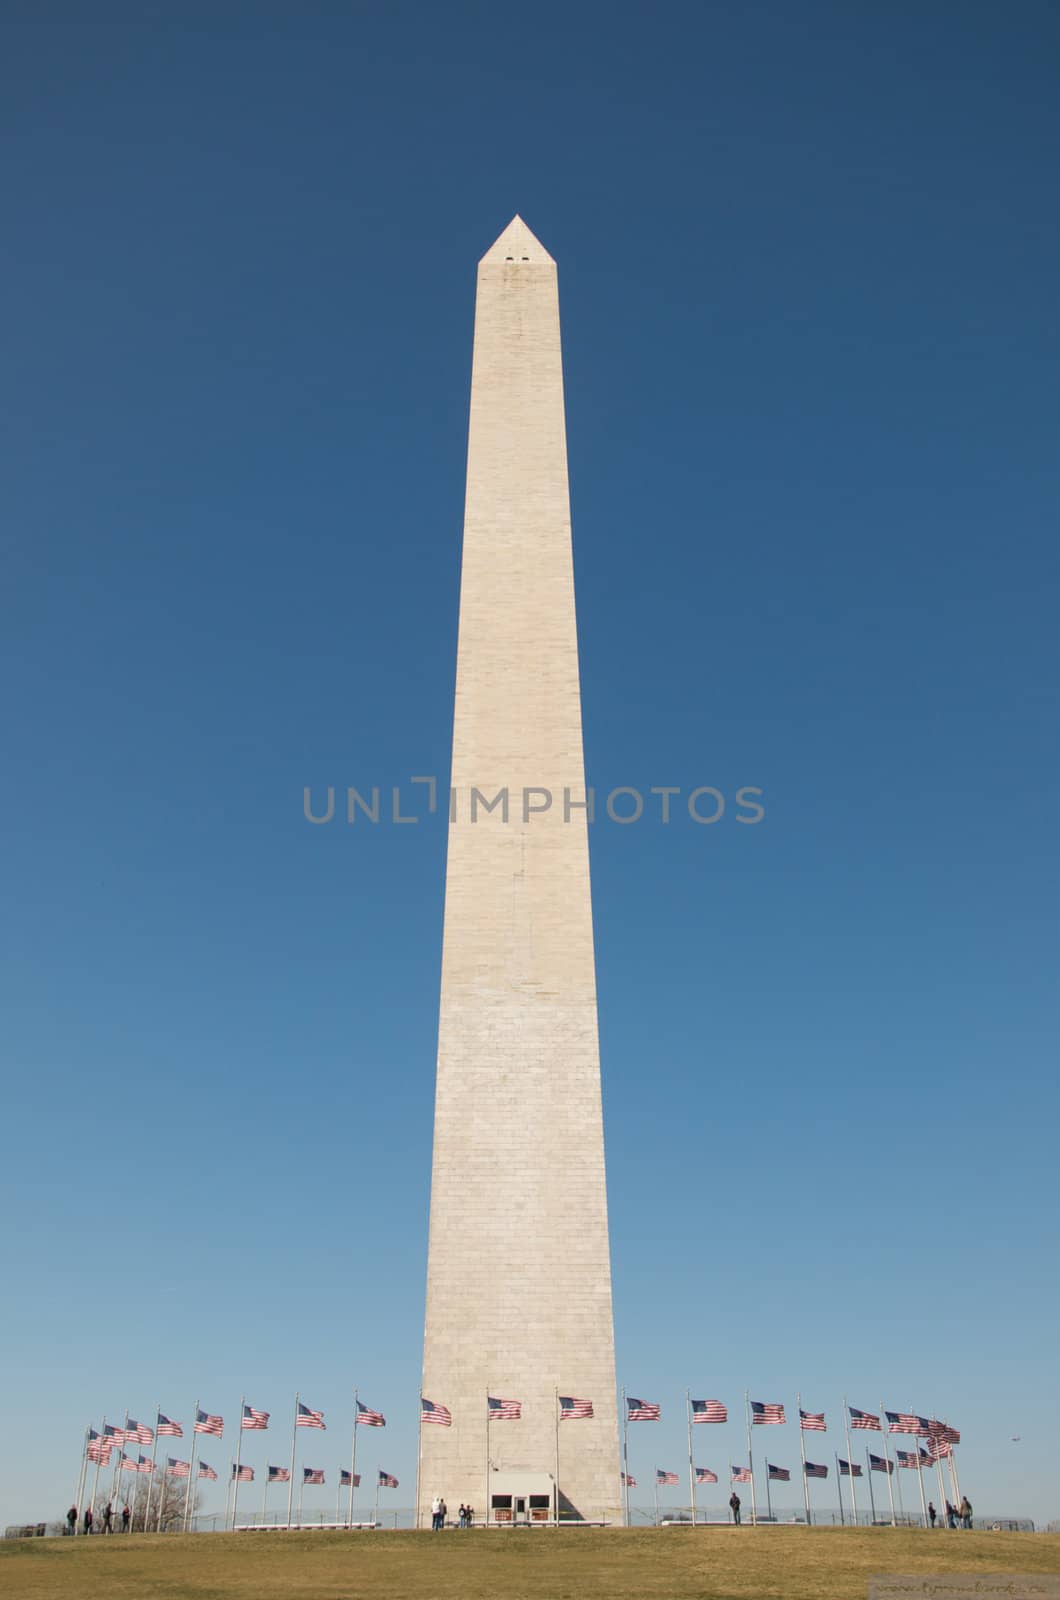 Washington Monument by tyroneburkemedia@gmail.com